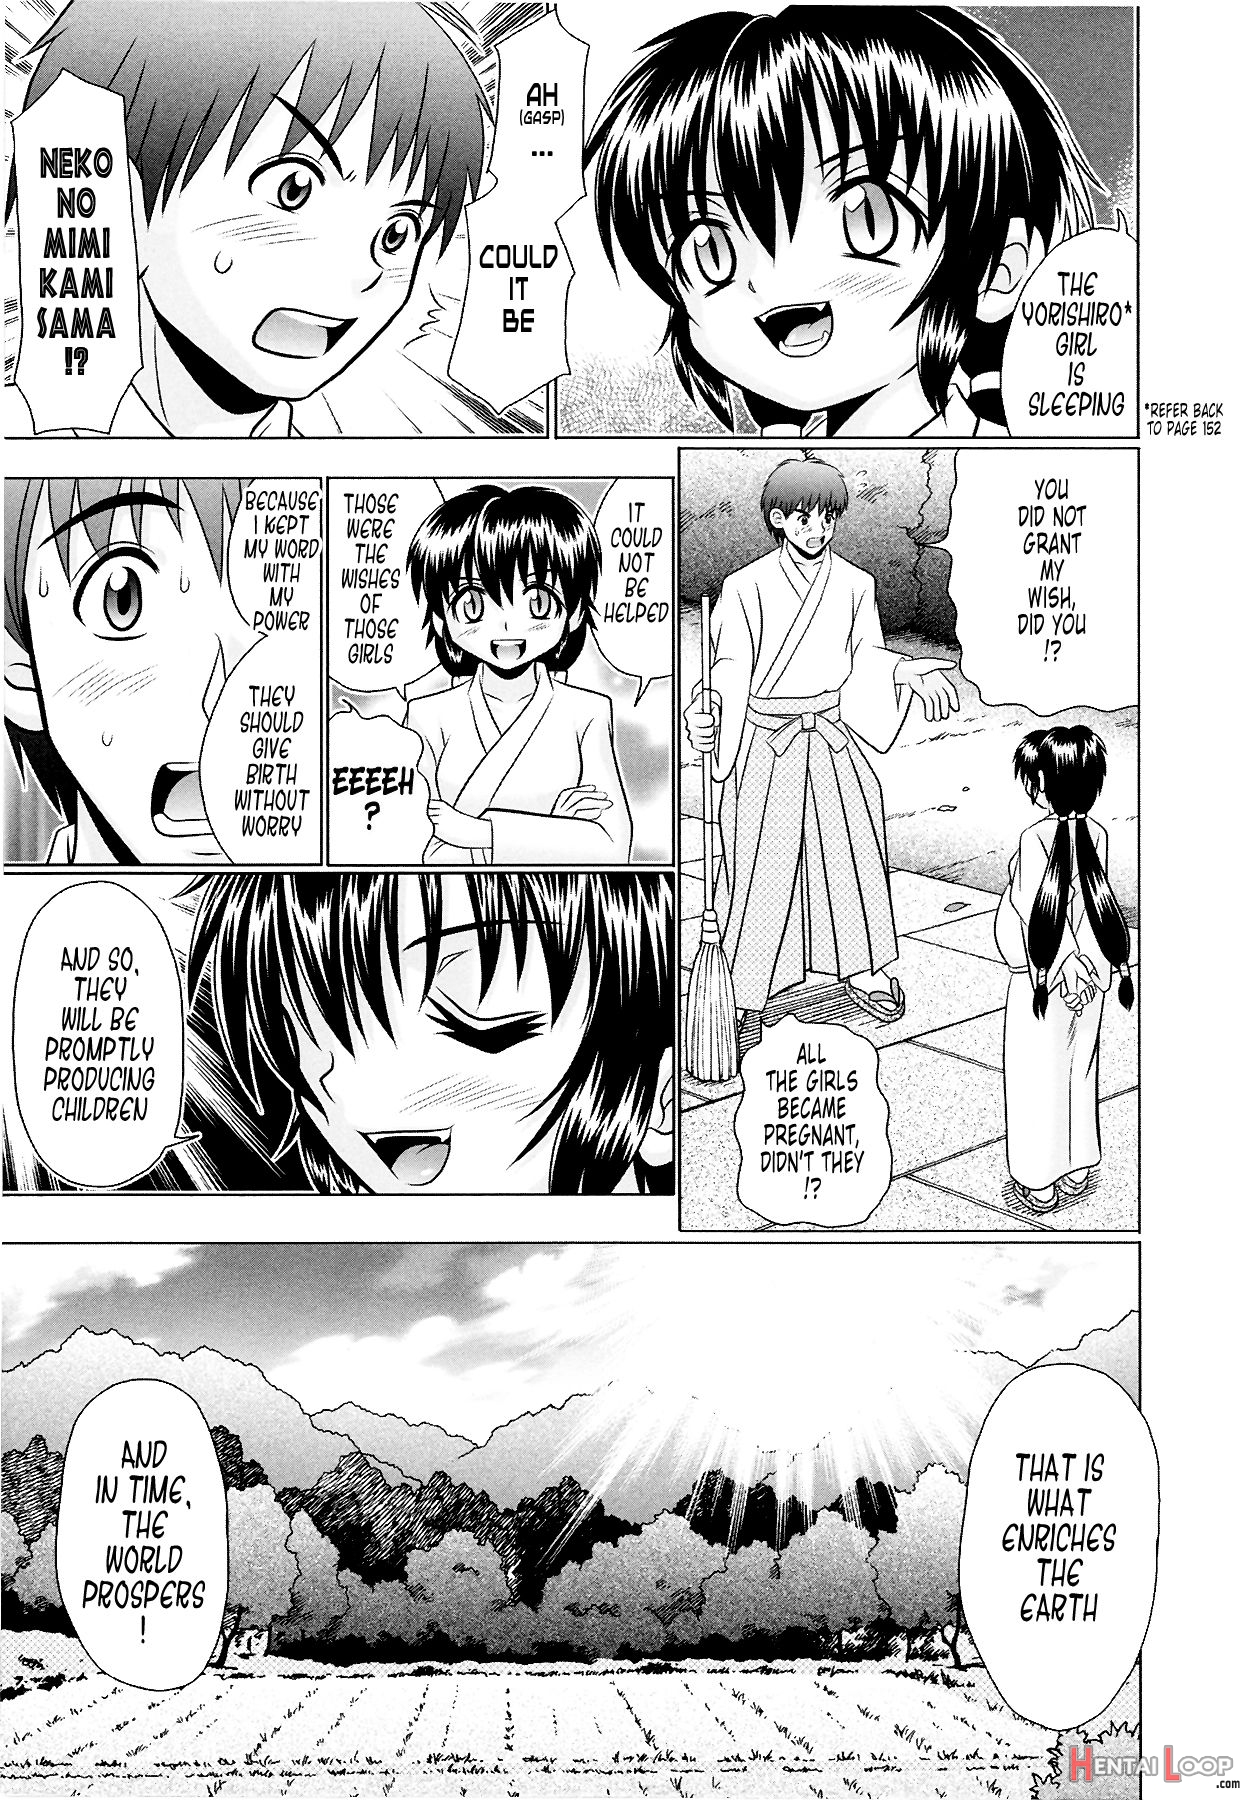 Tsukumimi 1&2 page 402